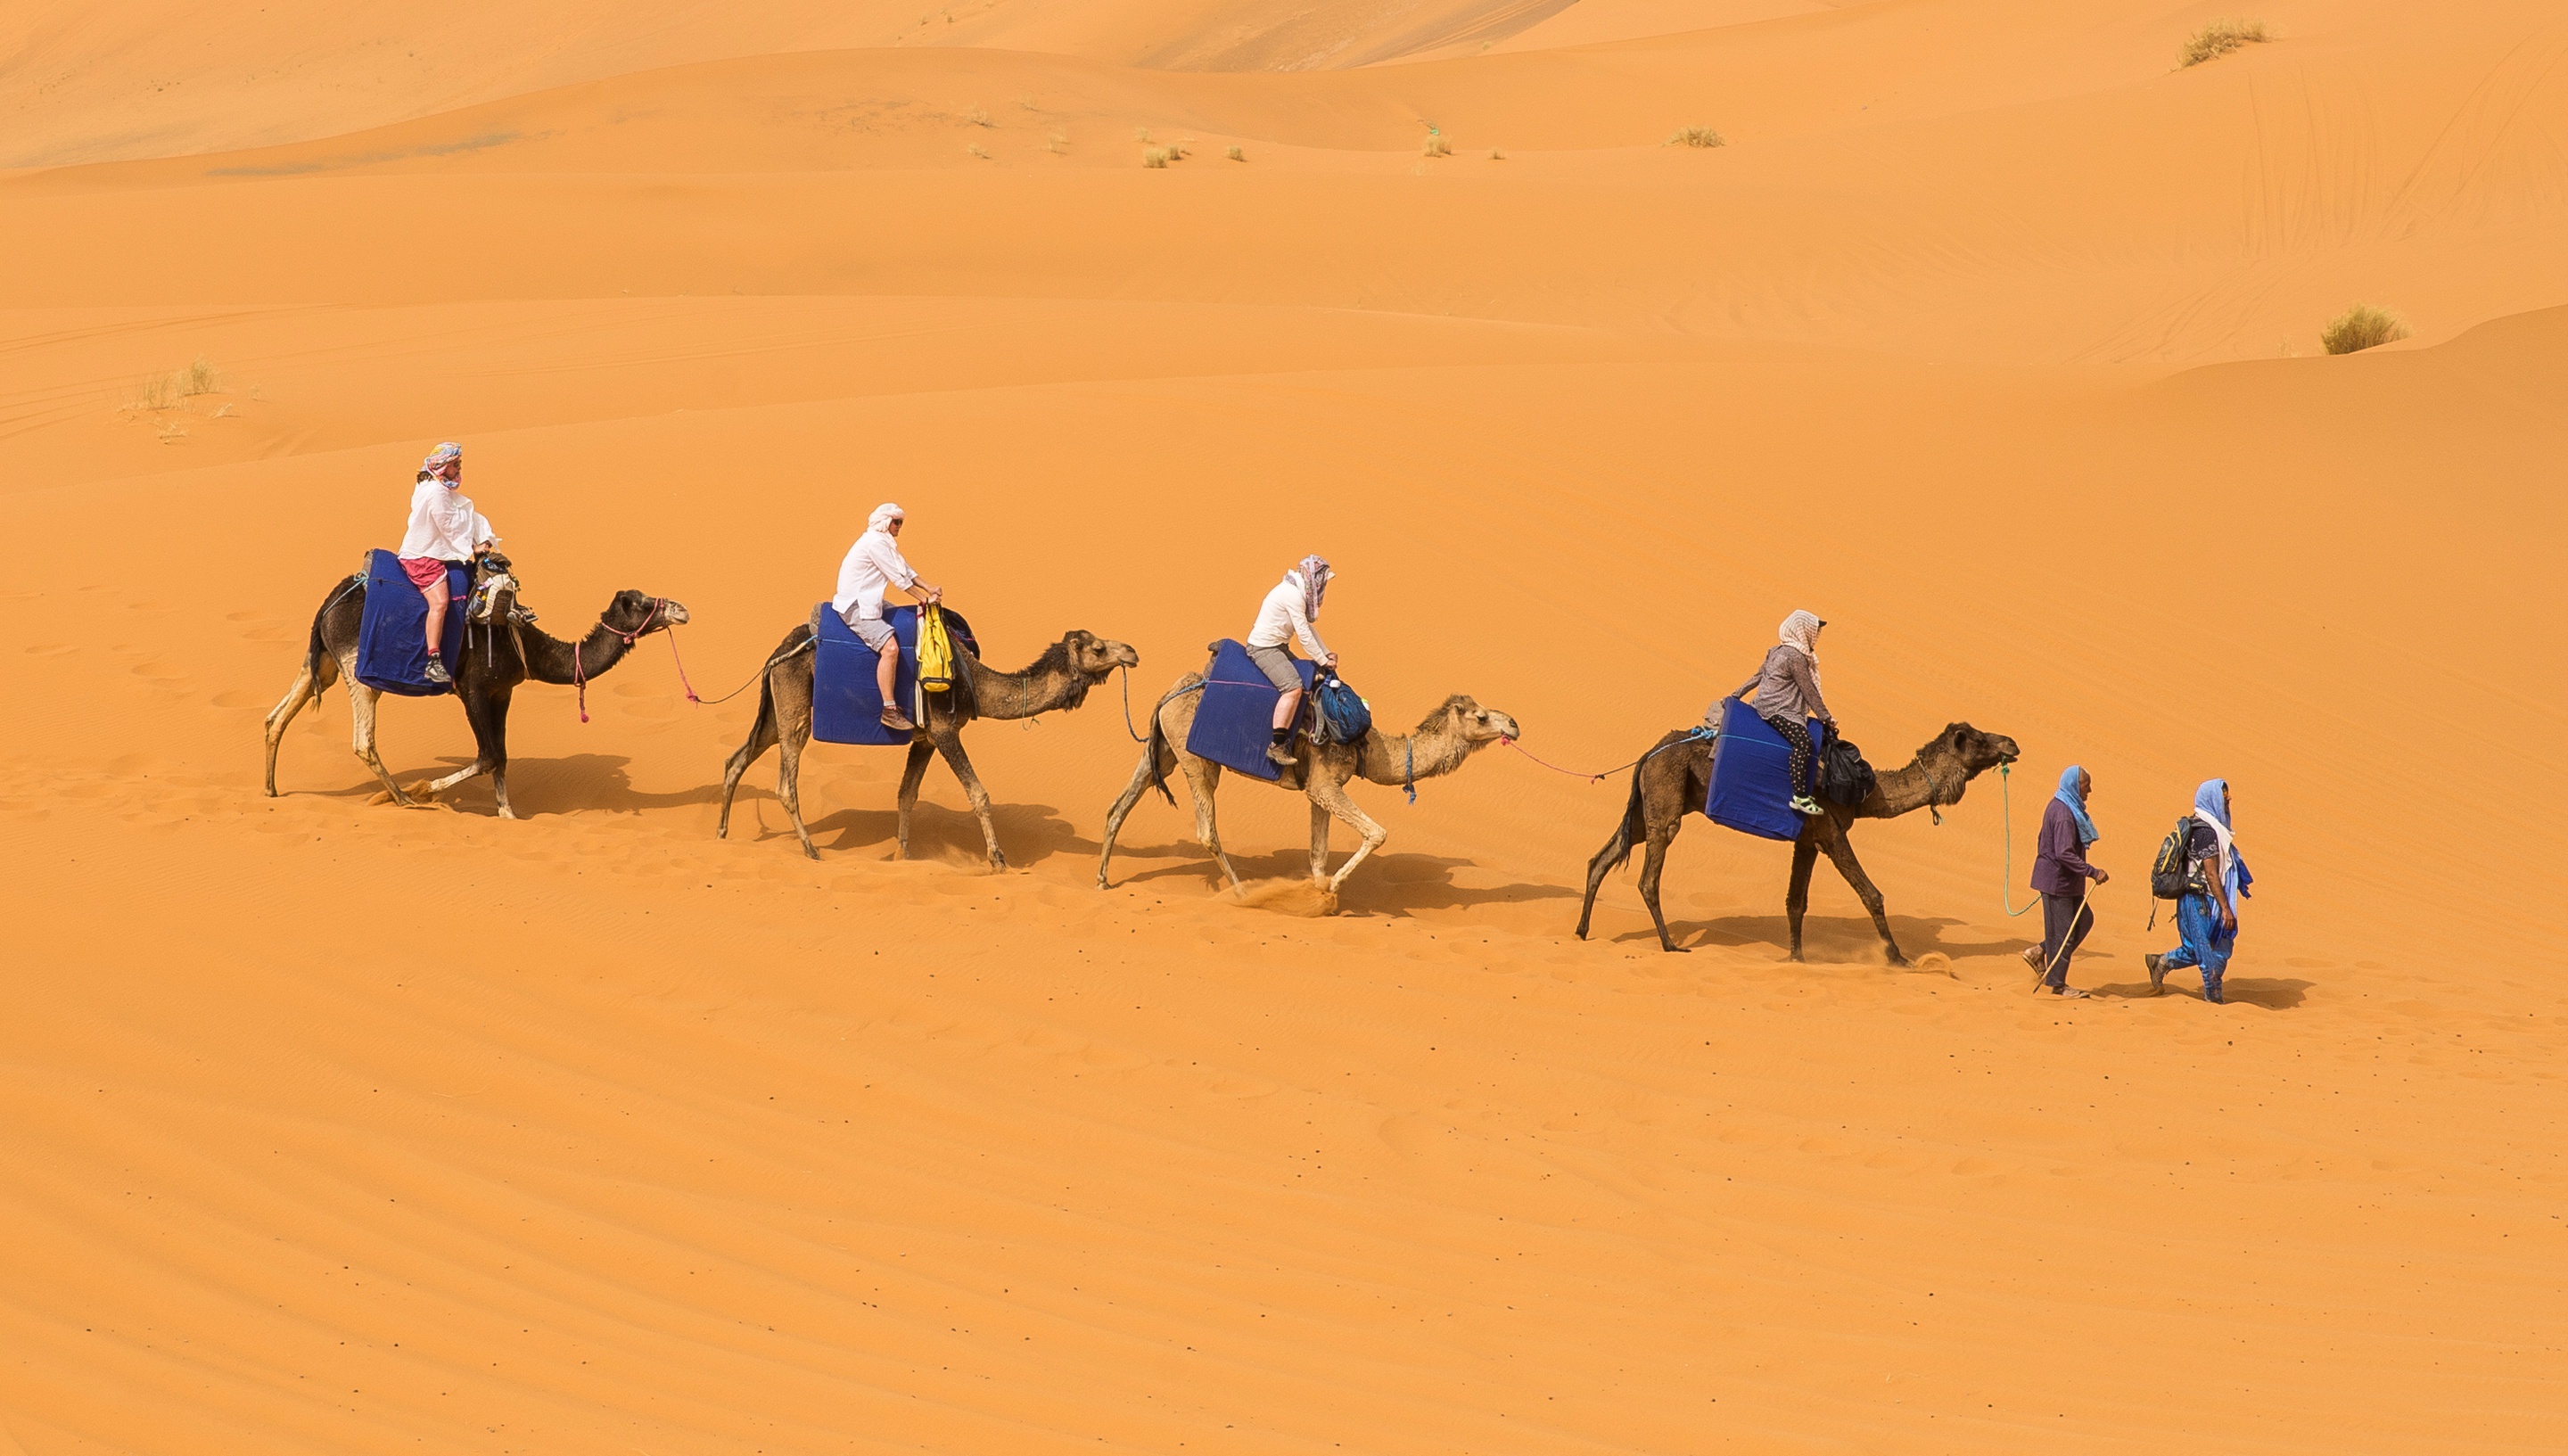 Караван движется. Мехари верблюд. Бедуин на верблюде. Караван с верблюдами в пустыне. Бедуин с верблюдом в пустыне.